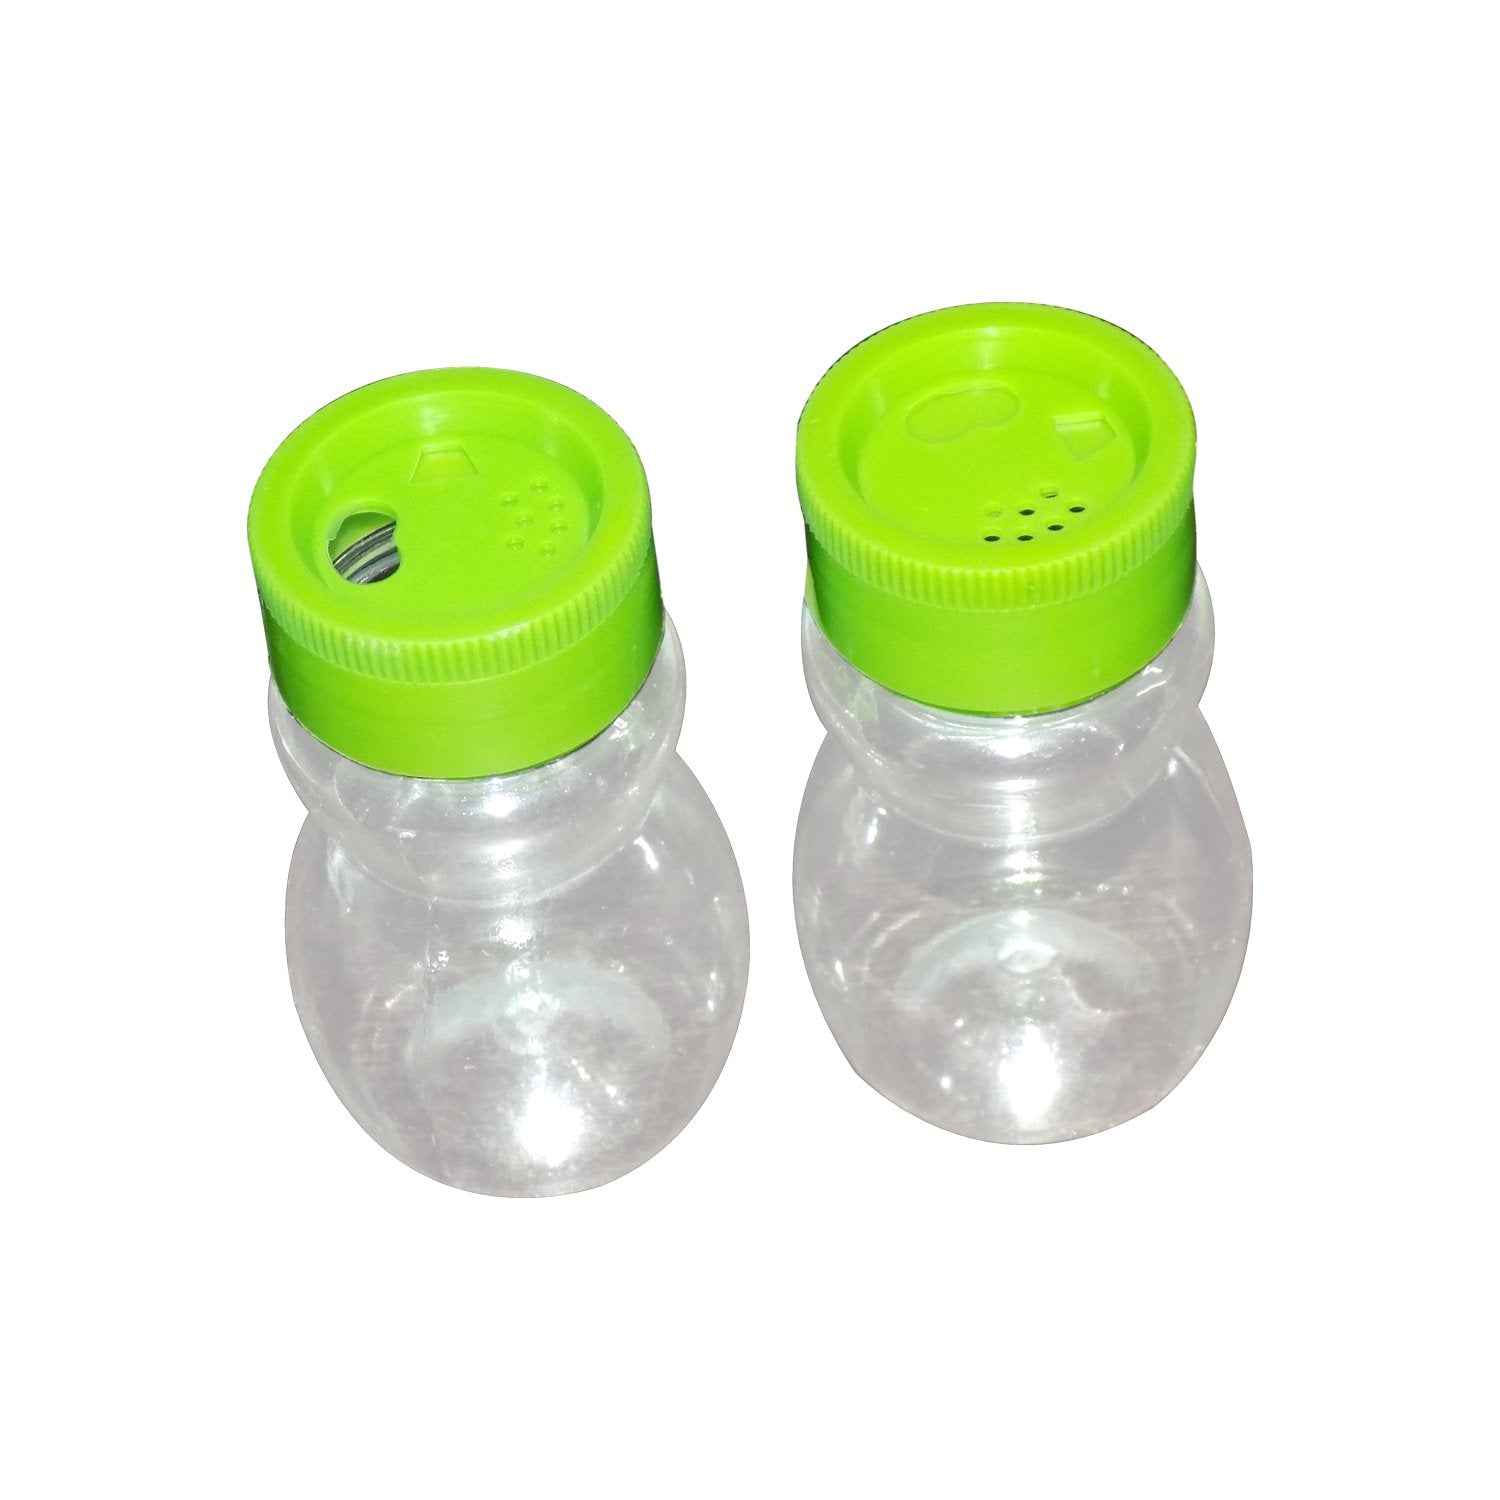 2287  Plastic Salt & Pepper Shakers/Masala Dabbi (Multicolour) - SkyShopy